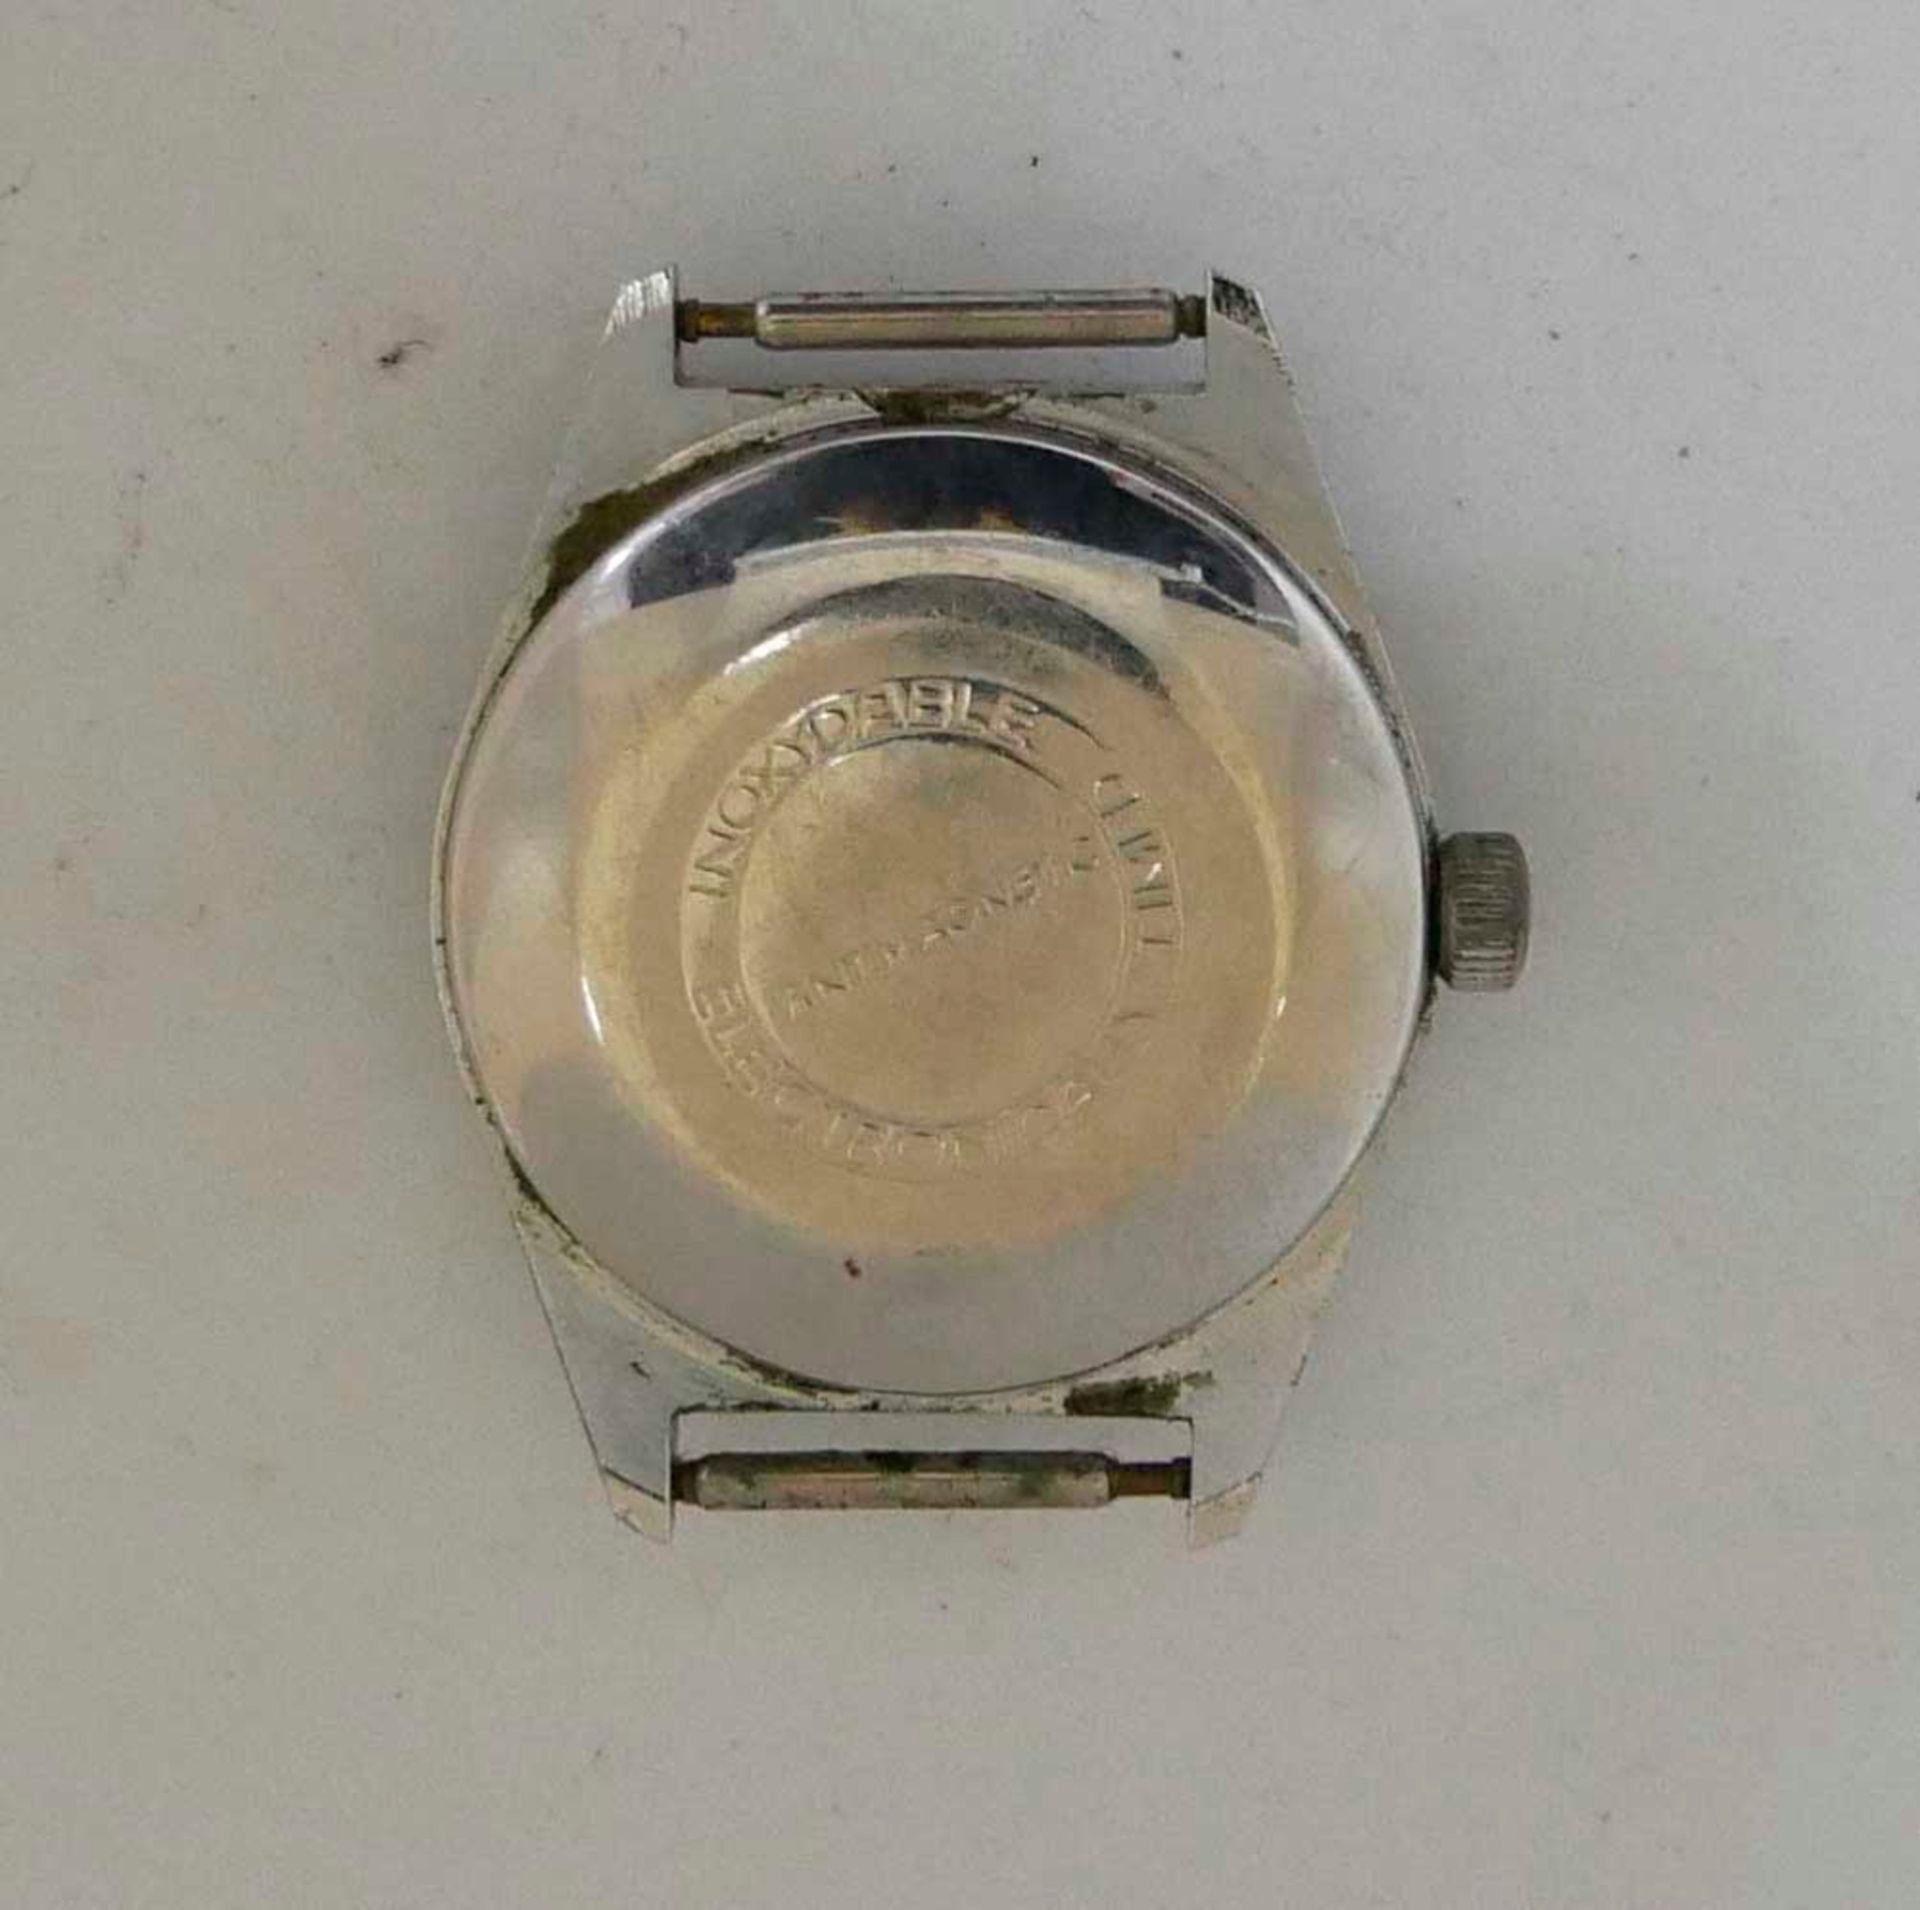 Ruhla de luxe Herren Armbanduhr mechanisch. Funktion geprüft. Made in GDR Ostalgie Ruhla watches - Image 2 of 2